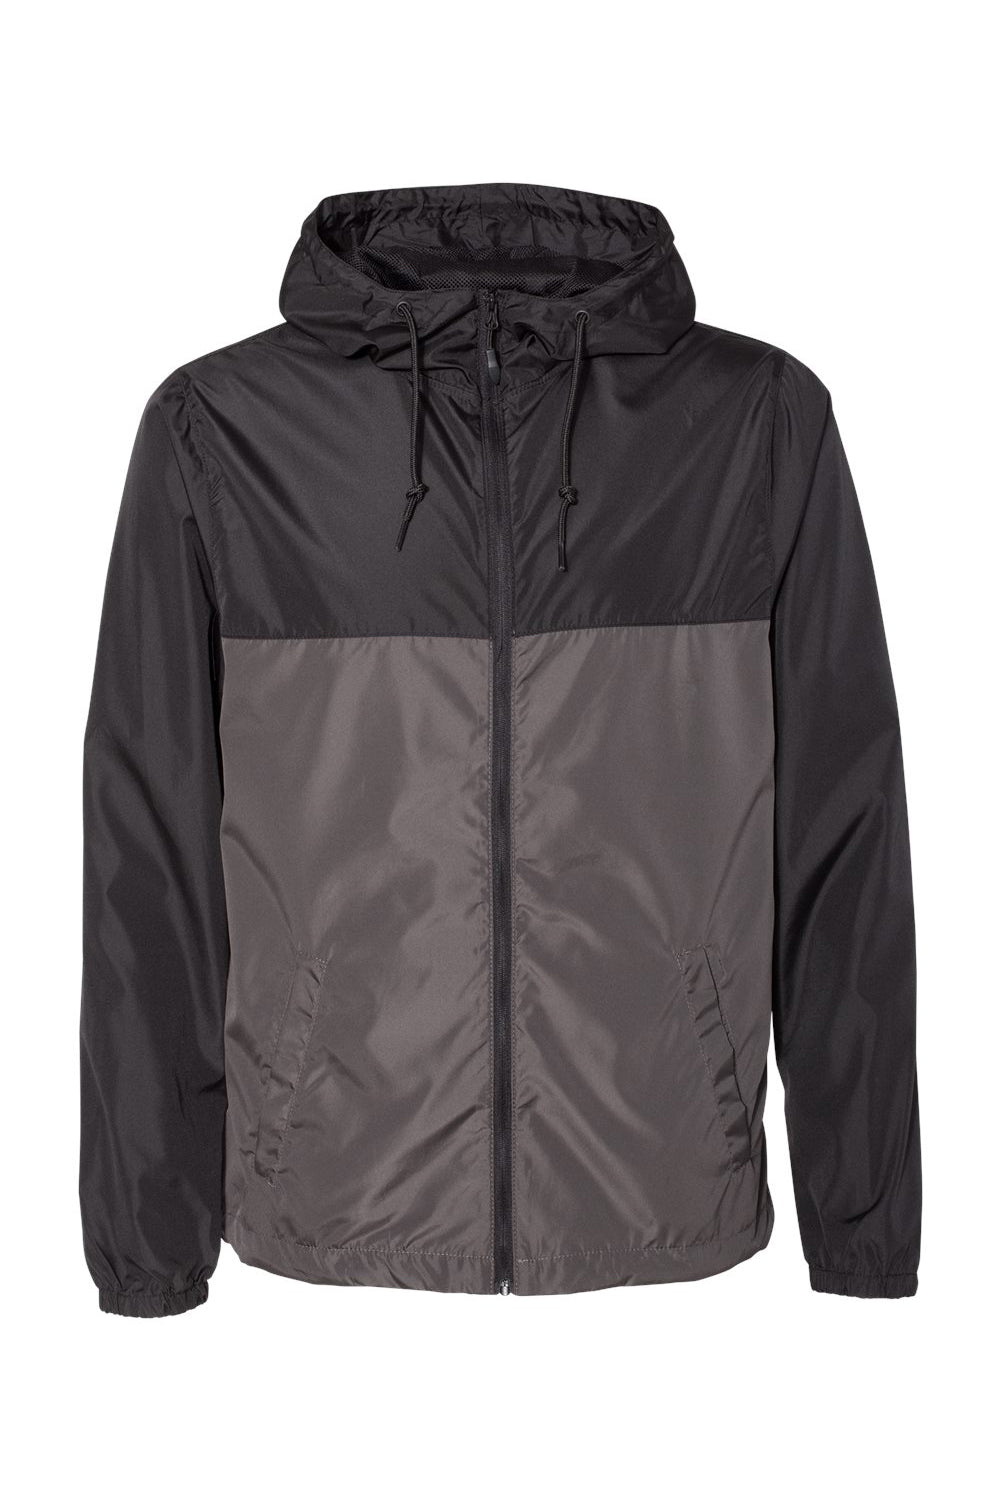 Independent Trading Co. EXP54LWZ Mens Full Zip Windbreaker Hooded Jacket Black/Graphite Grey Flat Front